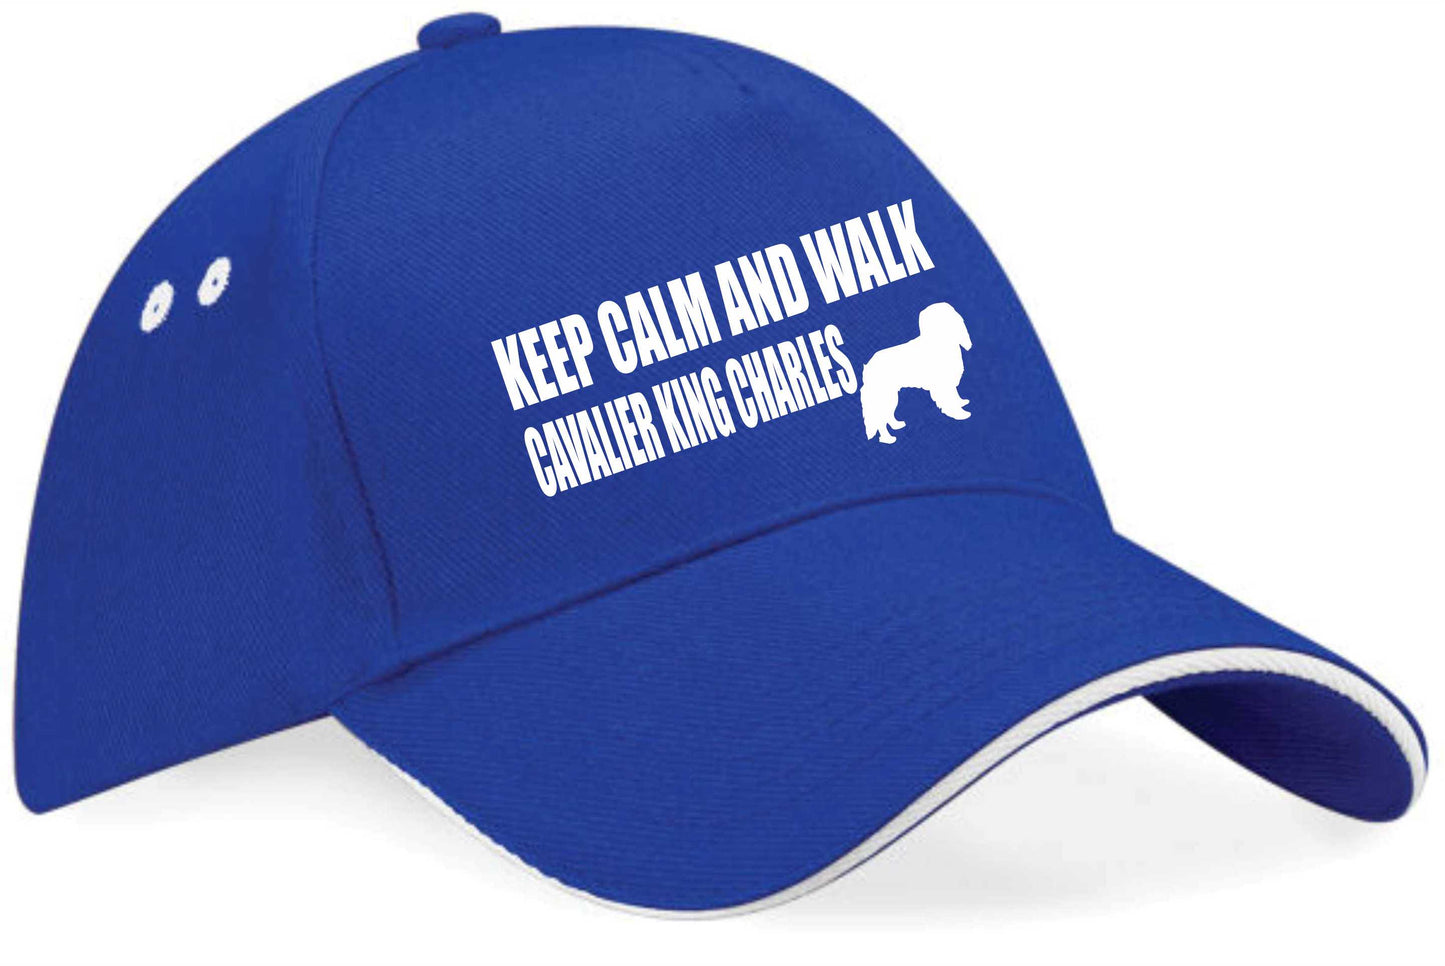 Keep Calm Walk King Charles Spaniel Baseball Cap Dog Lovers Gift Men & Ladies